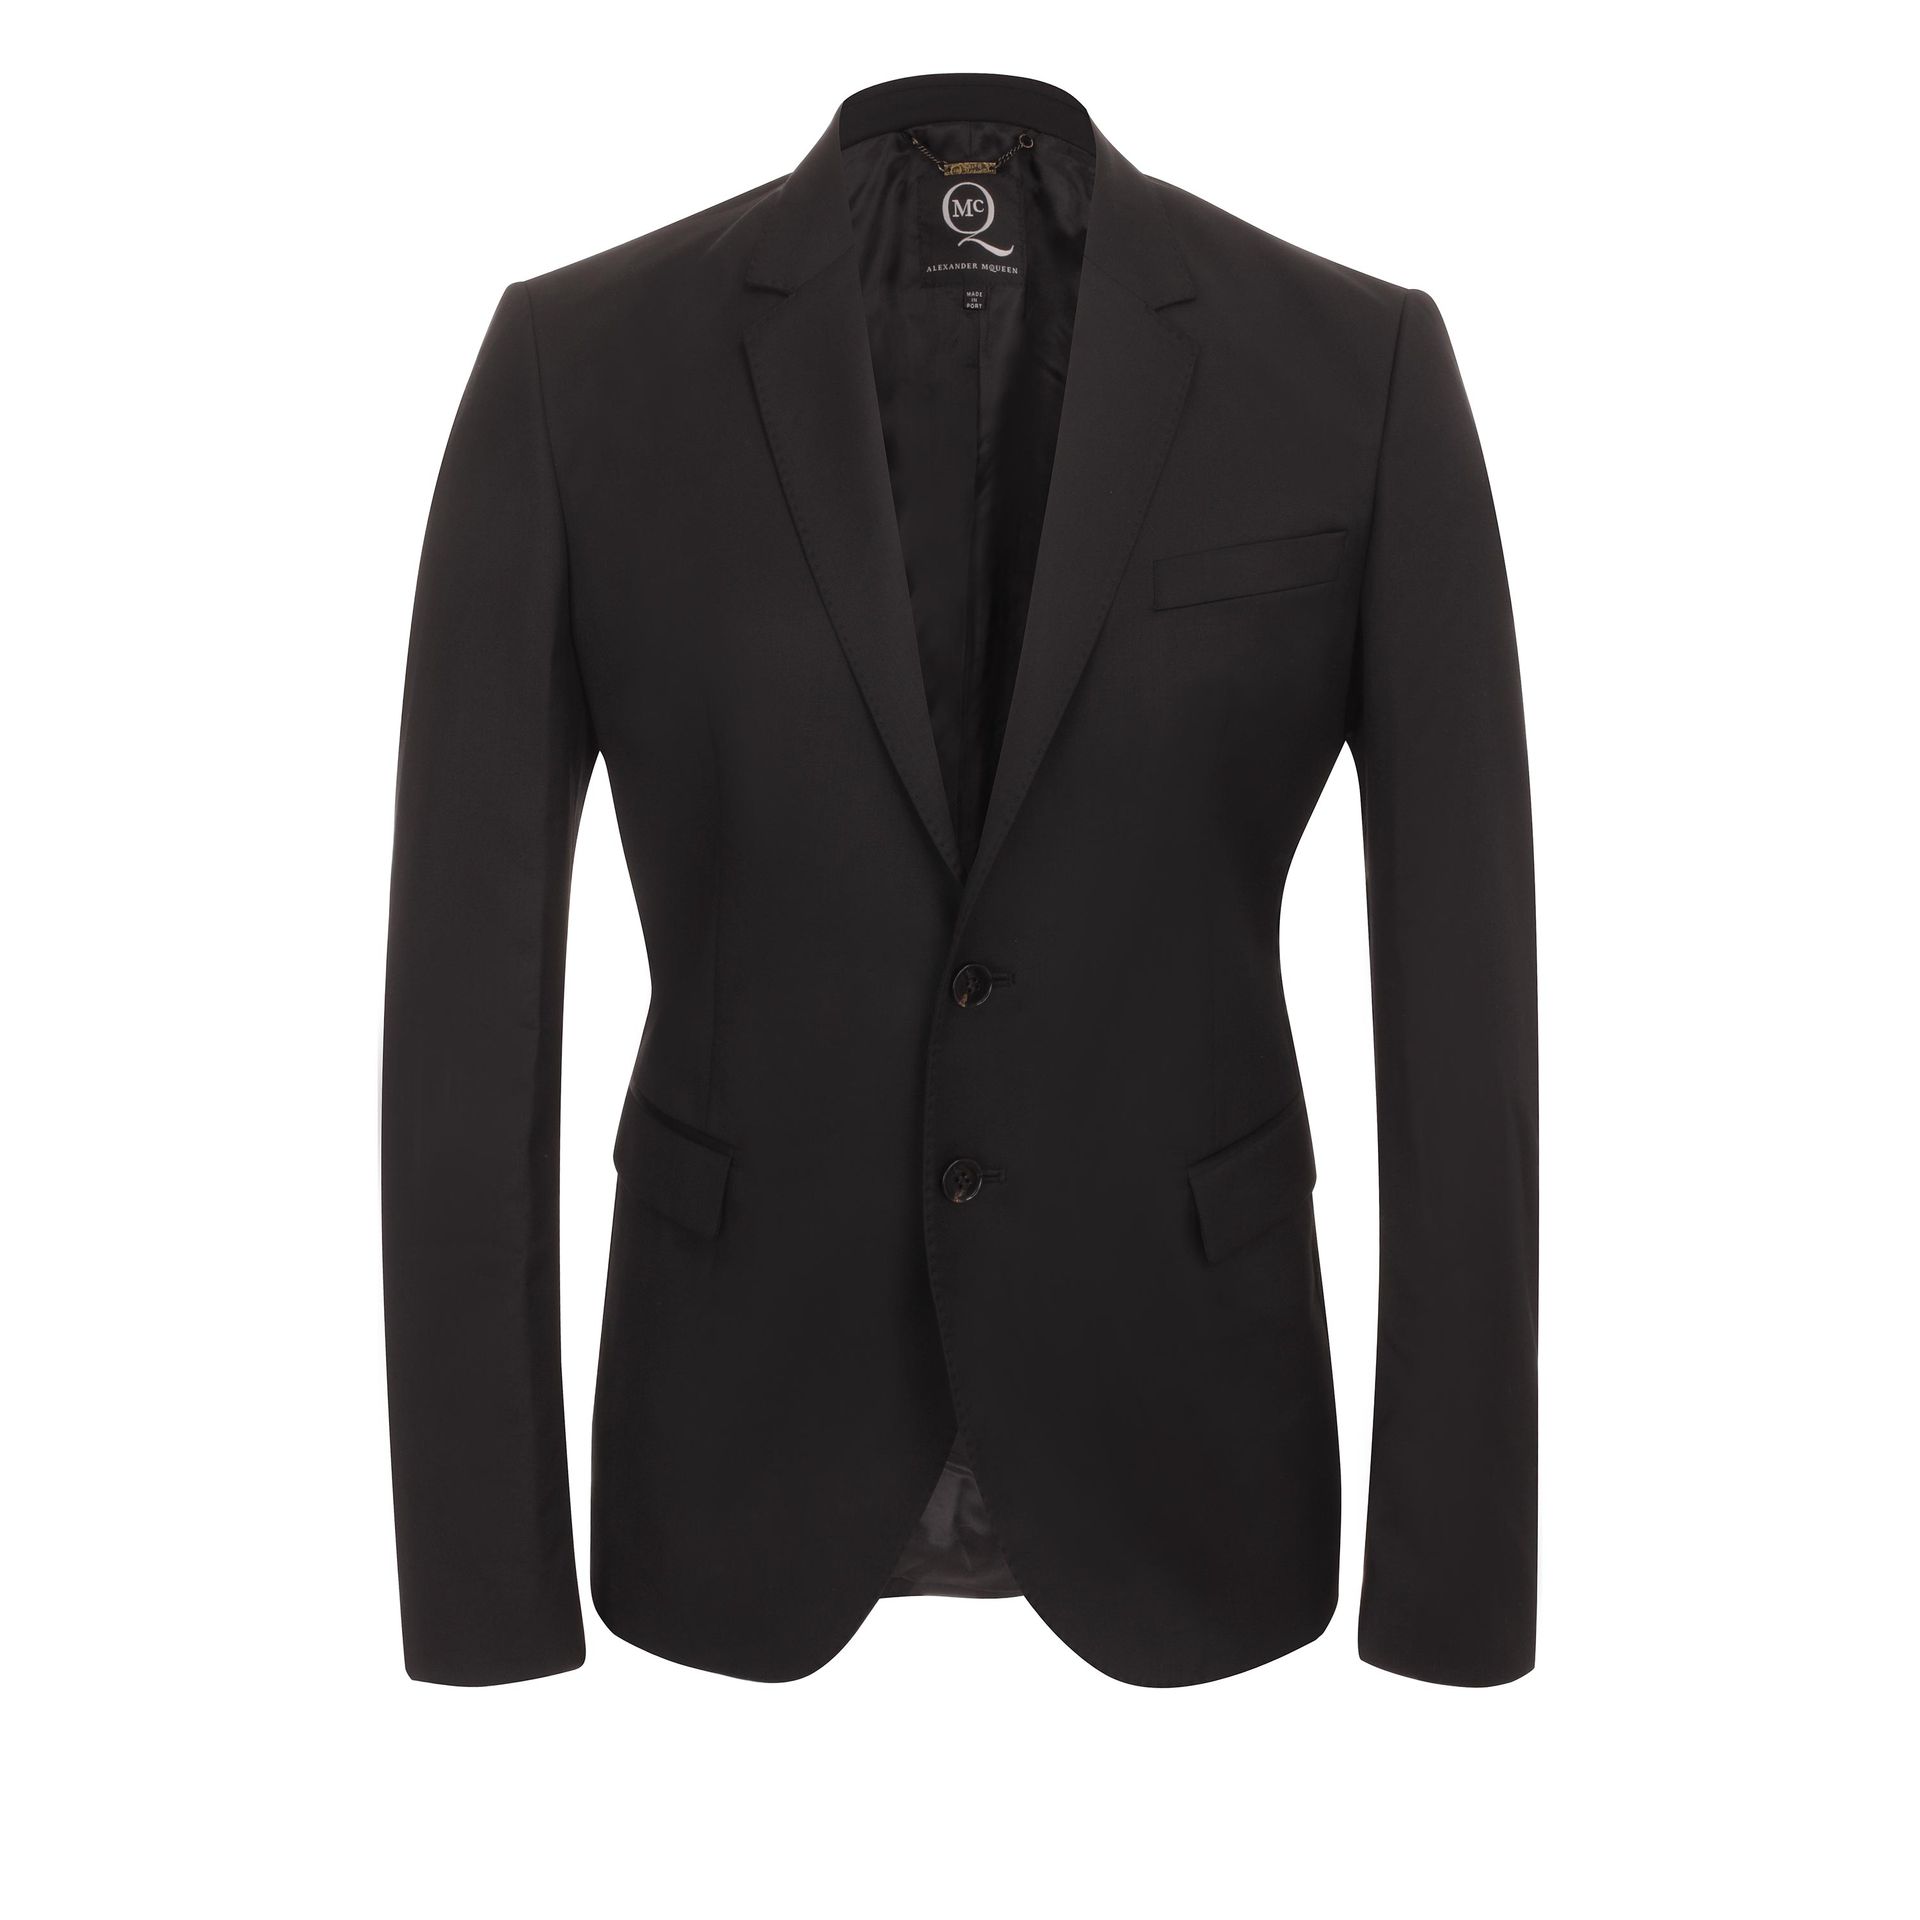 McQ Rock N Roll Suit Jacket in Black for Men - Lyst